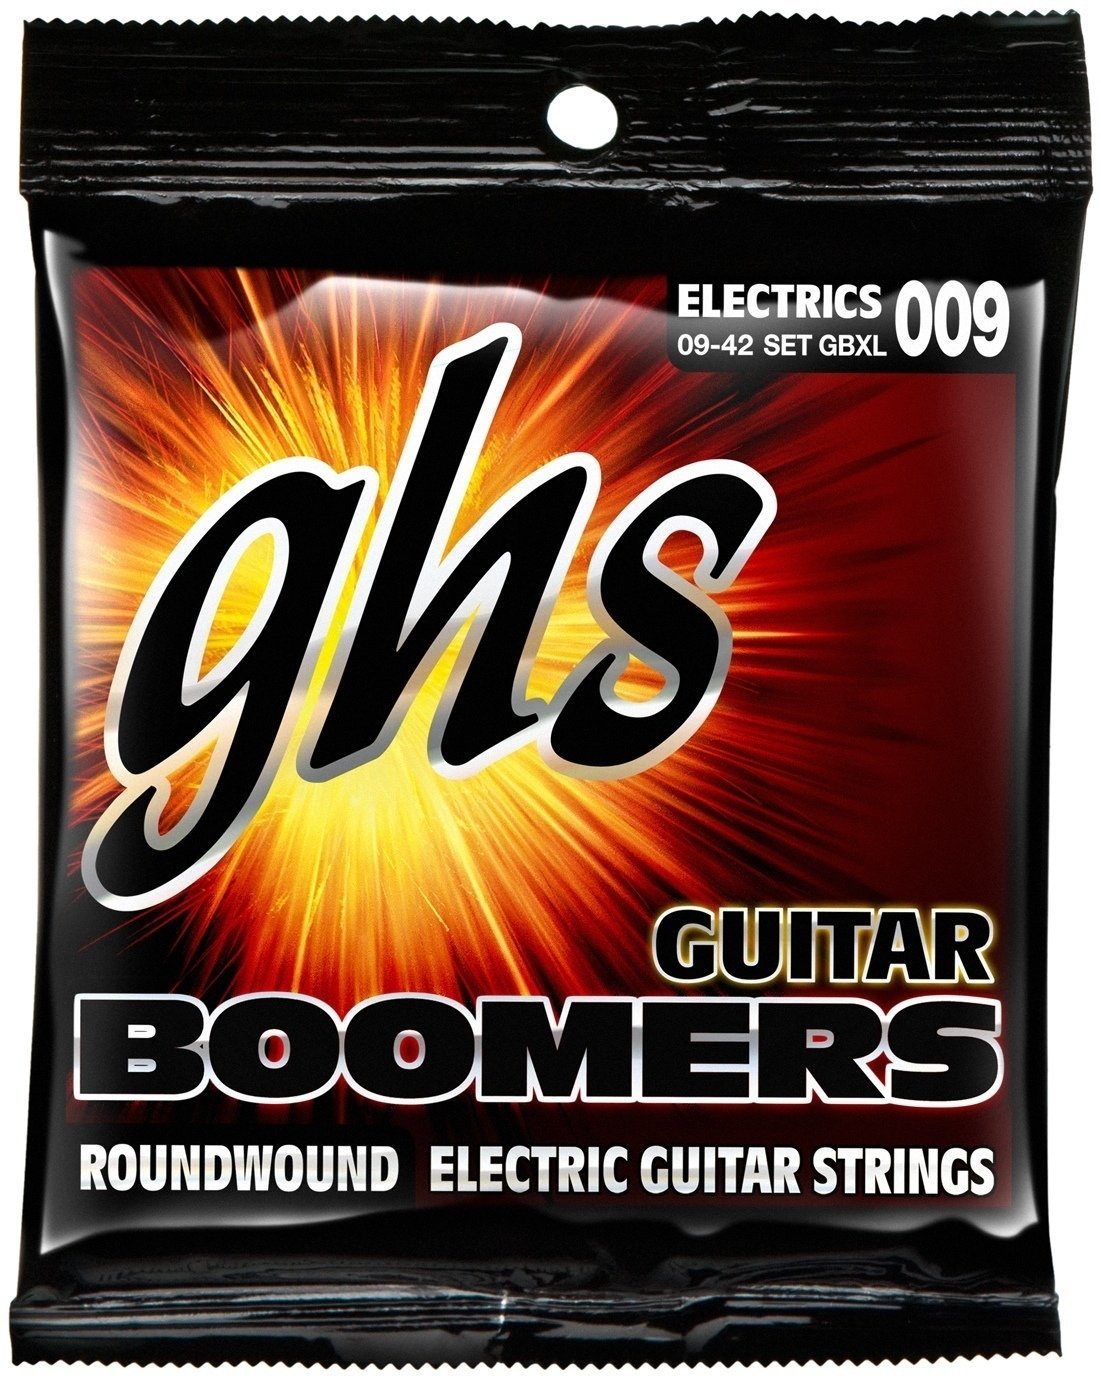 Corzi chitare electrice GHS Boomers Roundwound 9-42